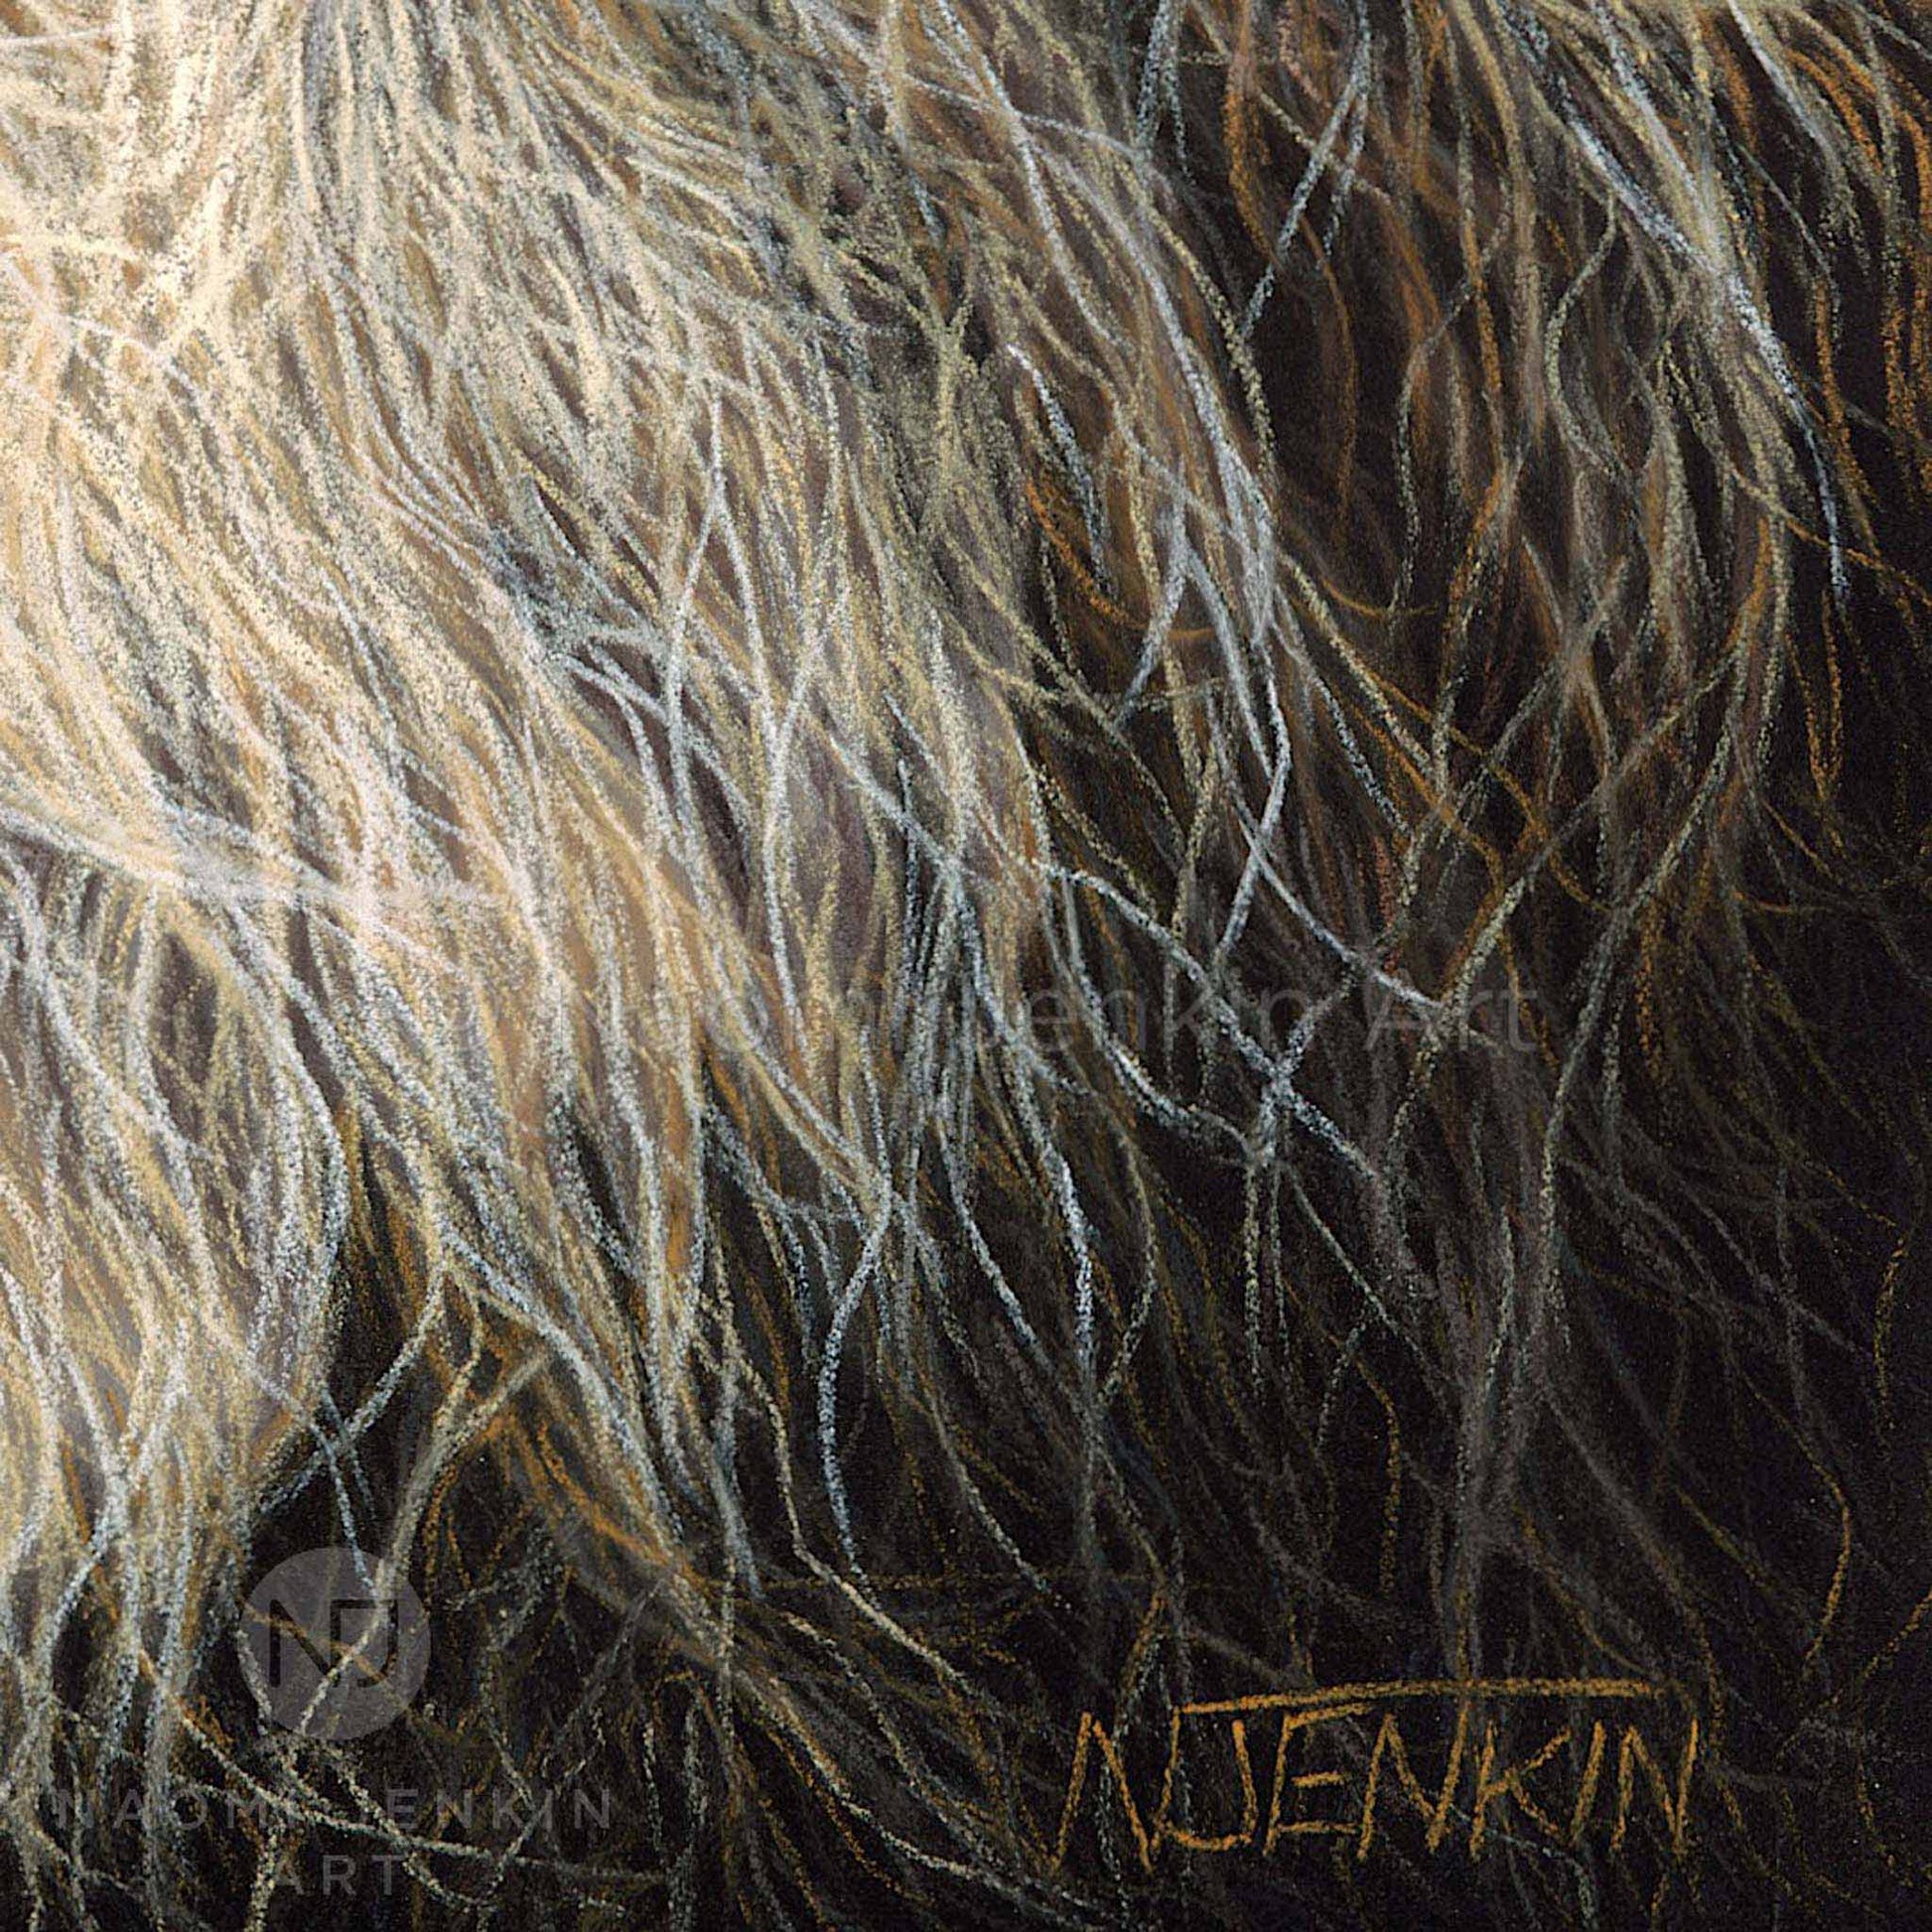 Close up detail of an original lion drawing by wildlife artist Naomi Jenkin